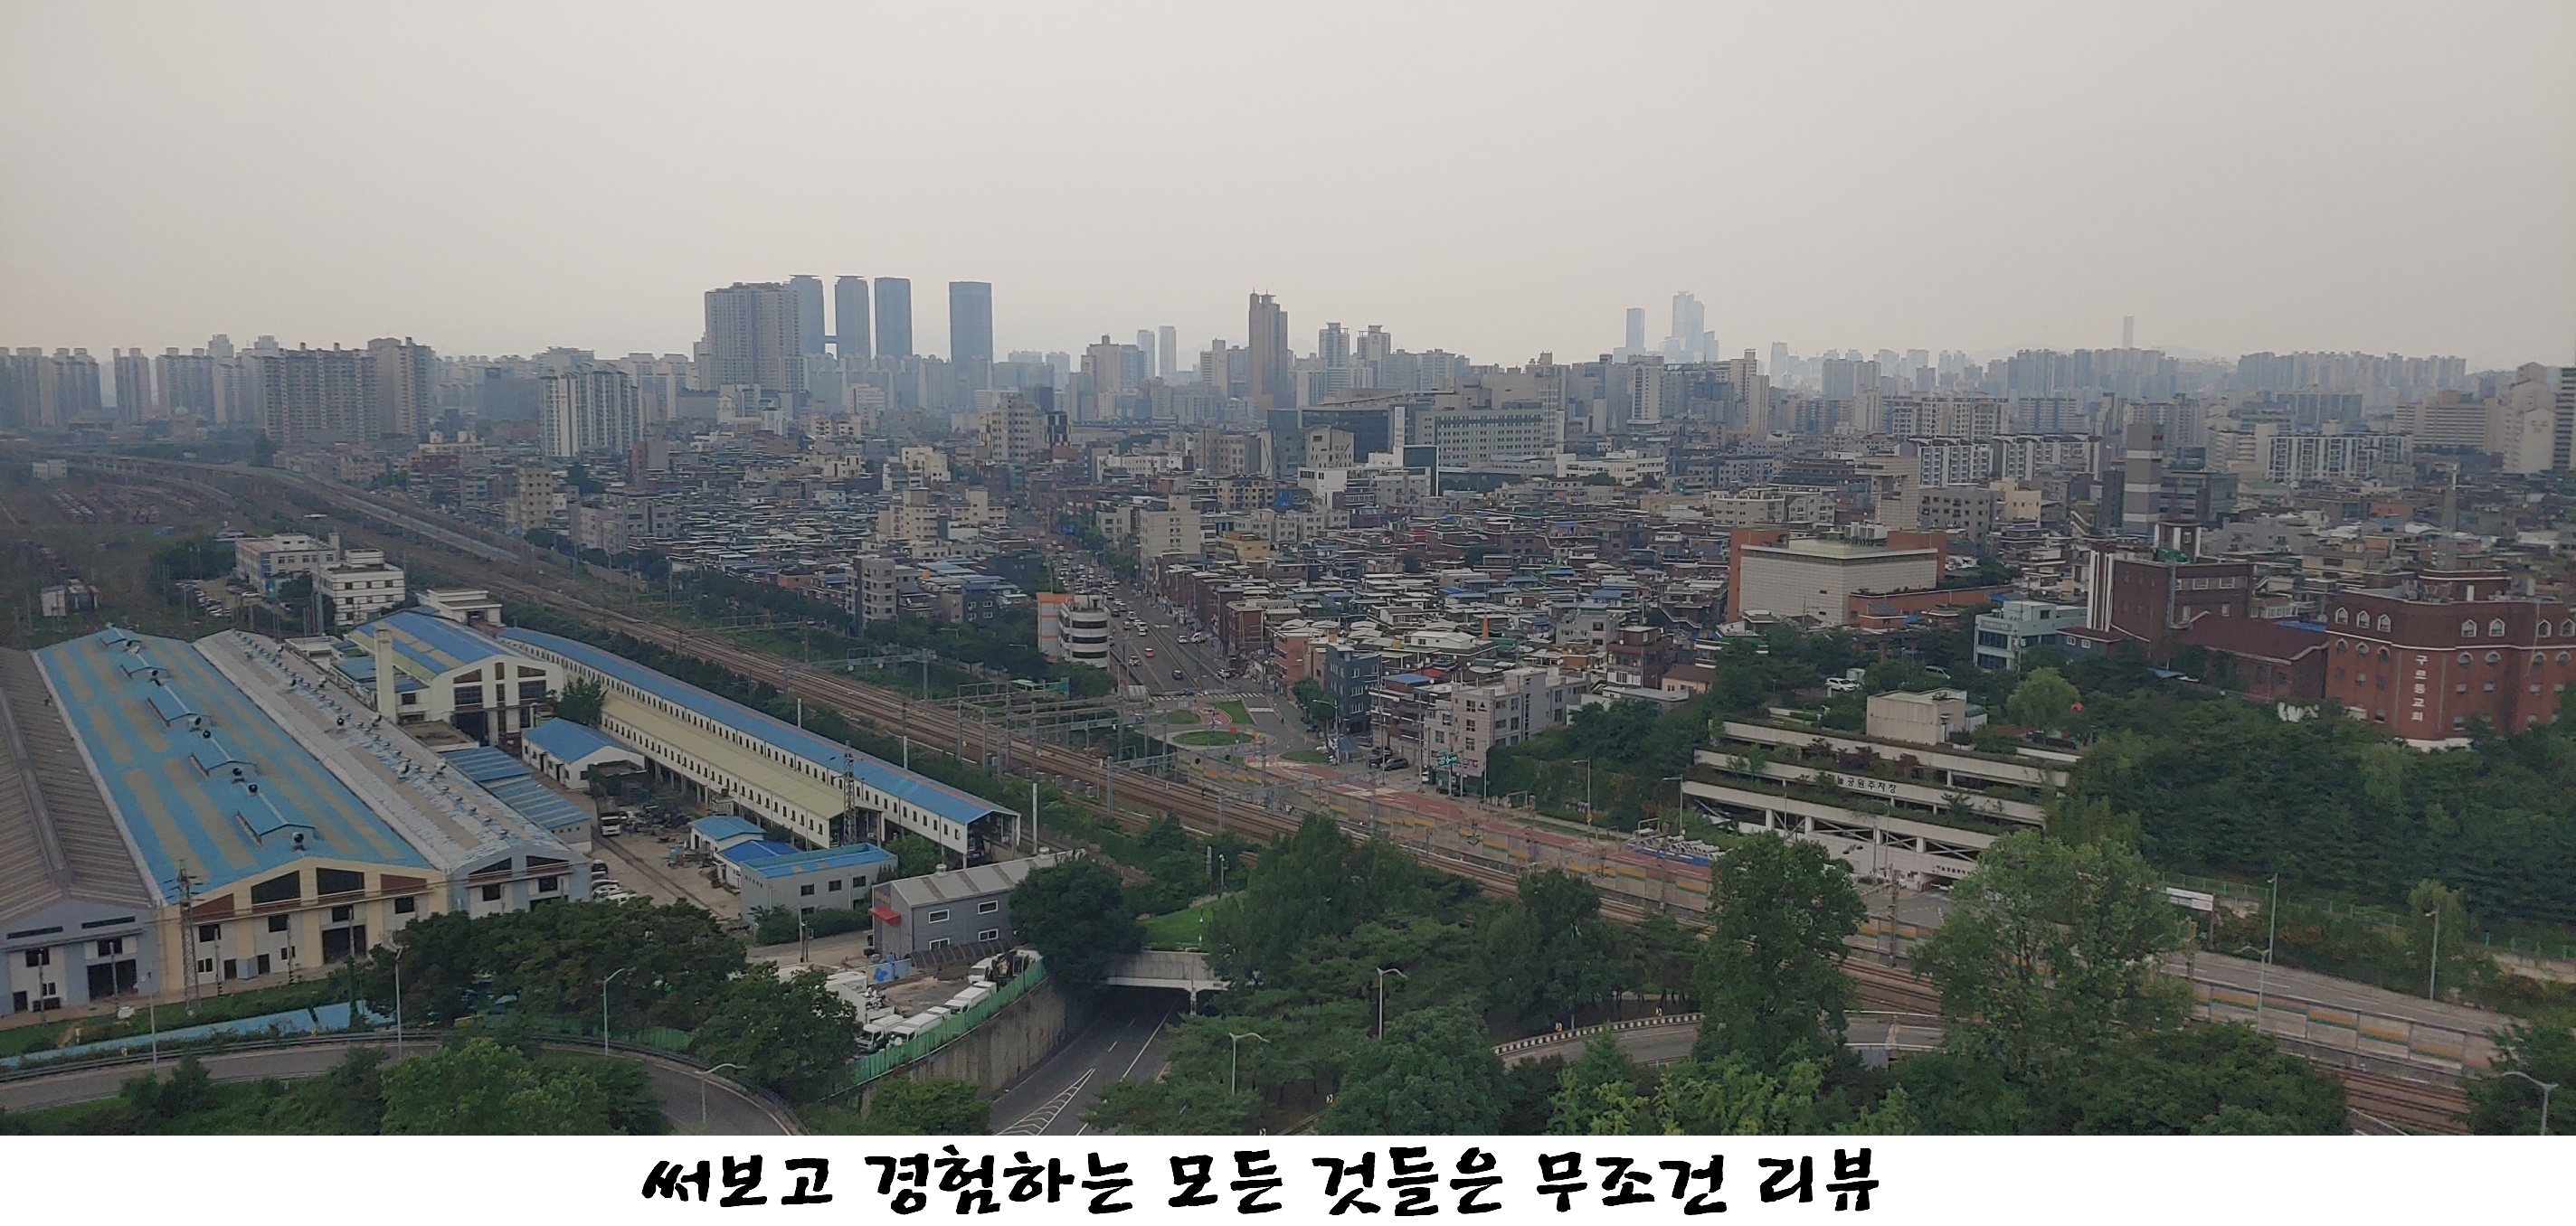 220704&#44; Seoul&#44; 사진&#44; 서울&#44; 풍경&#44; 하늘